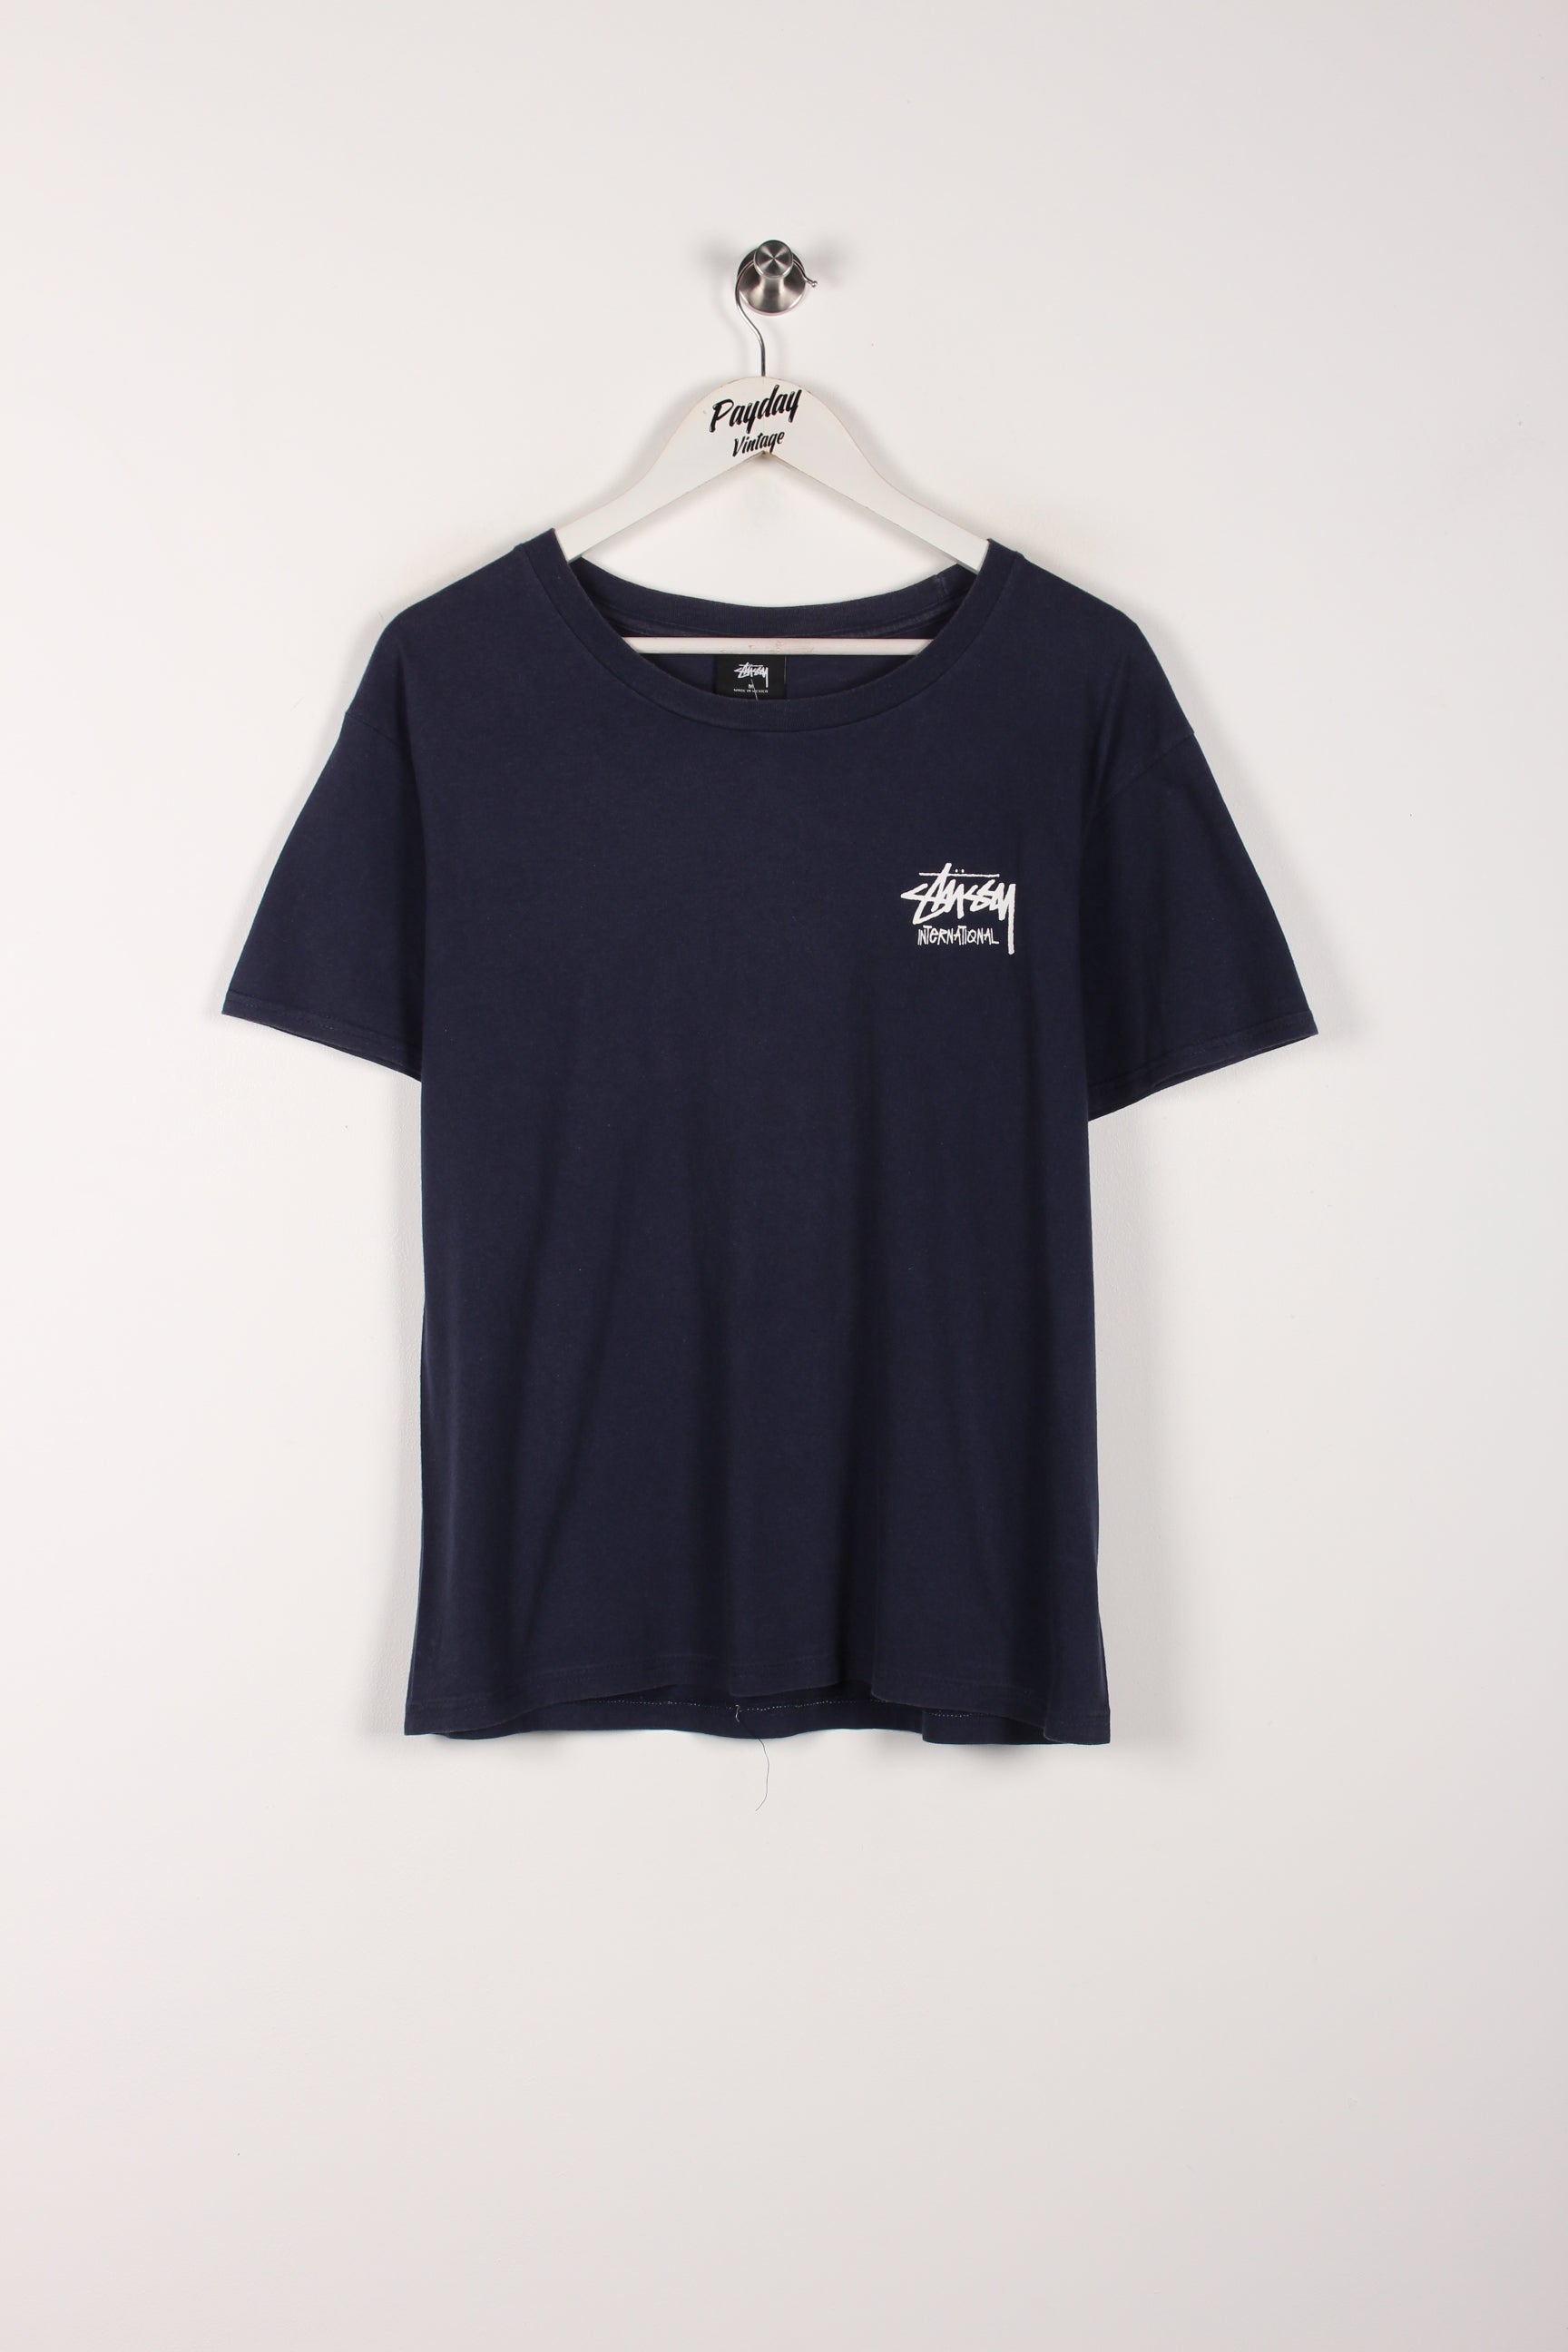 Stüssy Graphic T-Shirt Navy Small